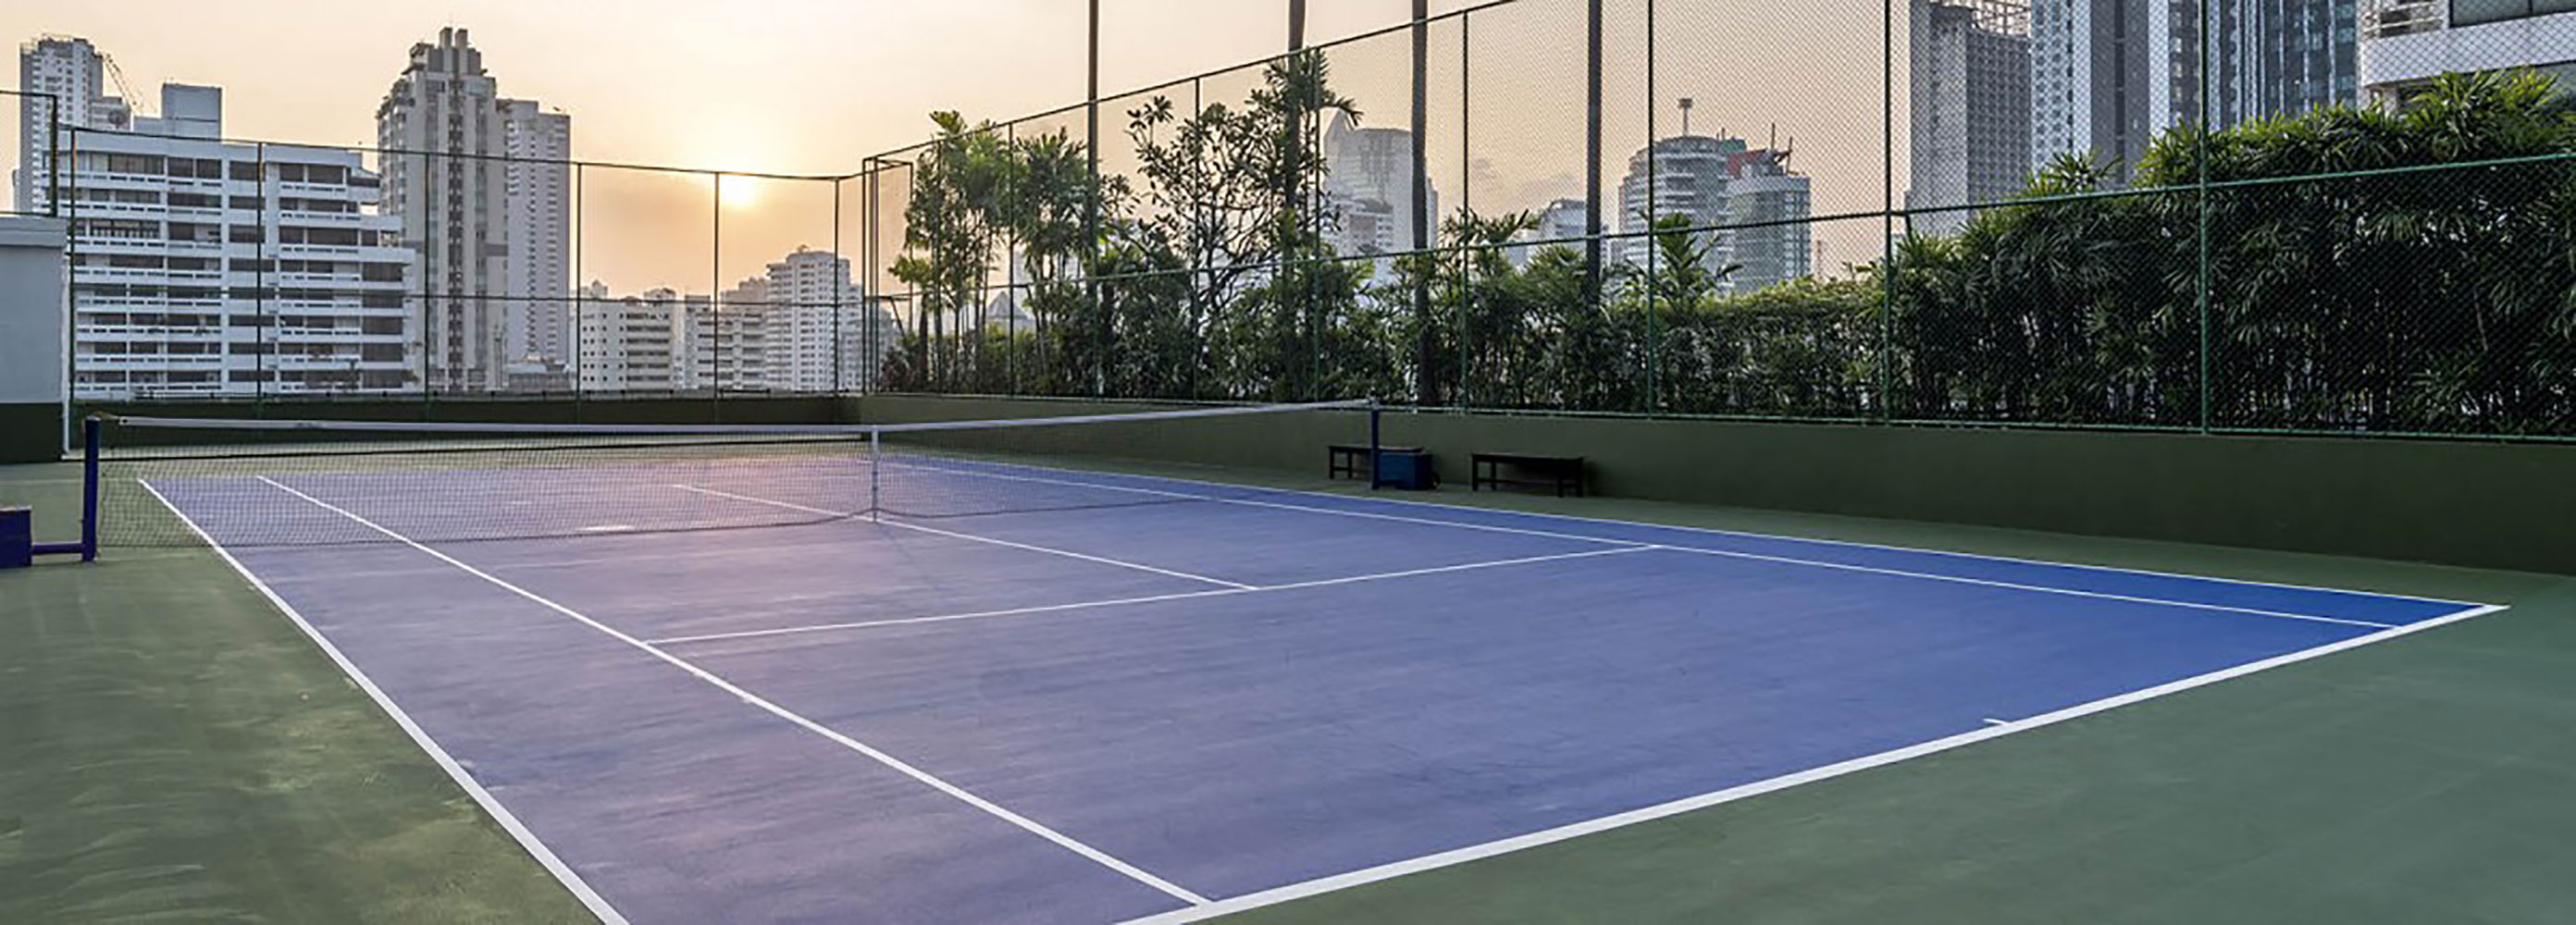 Tennis court filming location in Bangkok Thailand